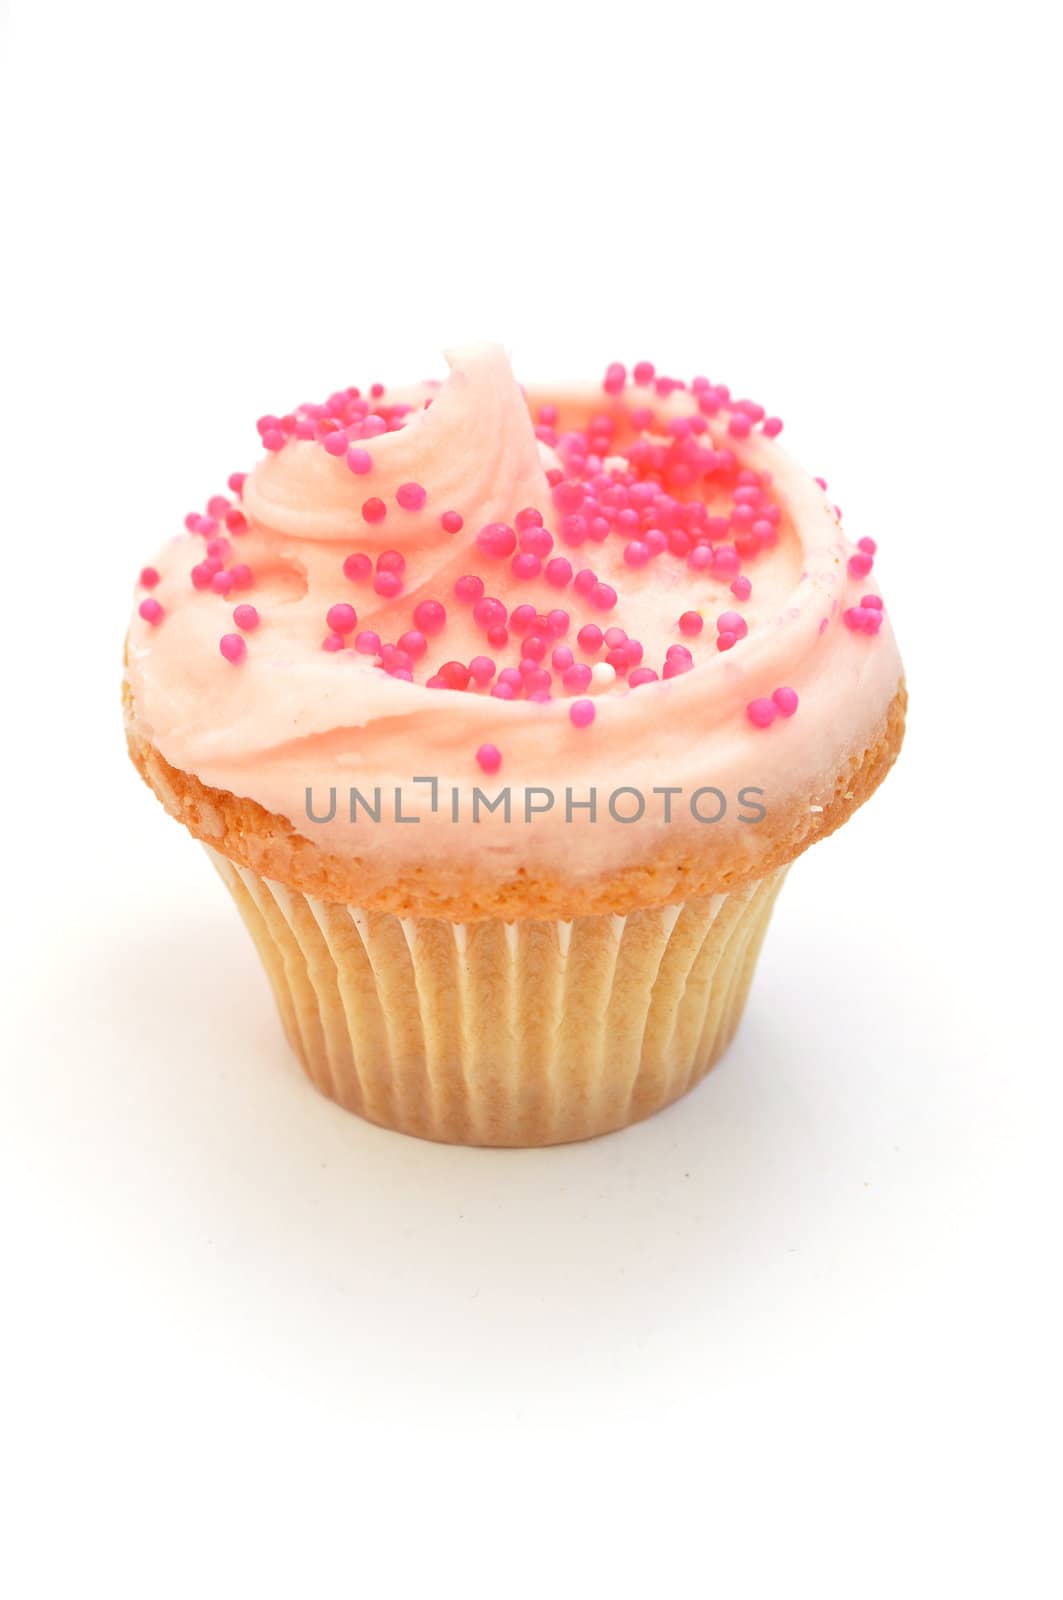 Studio isolated creamy pink cupcake 